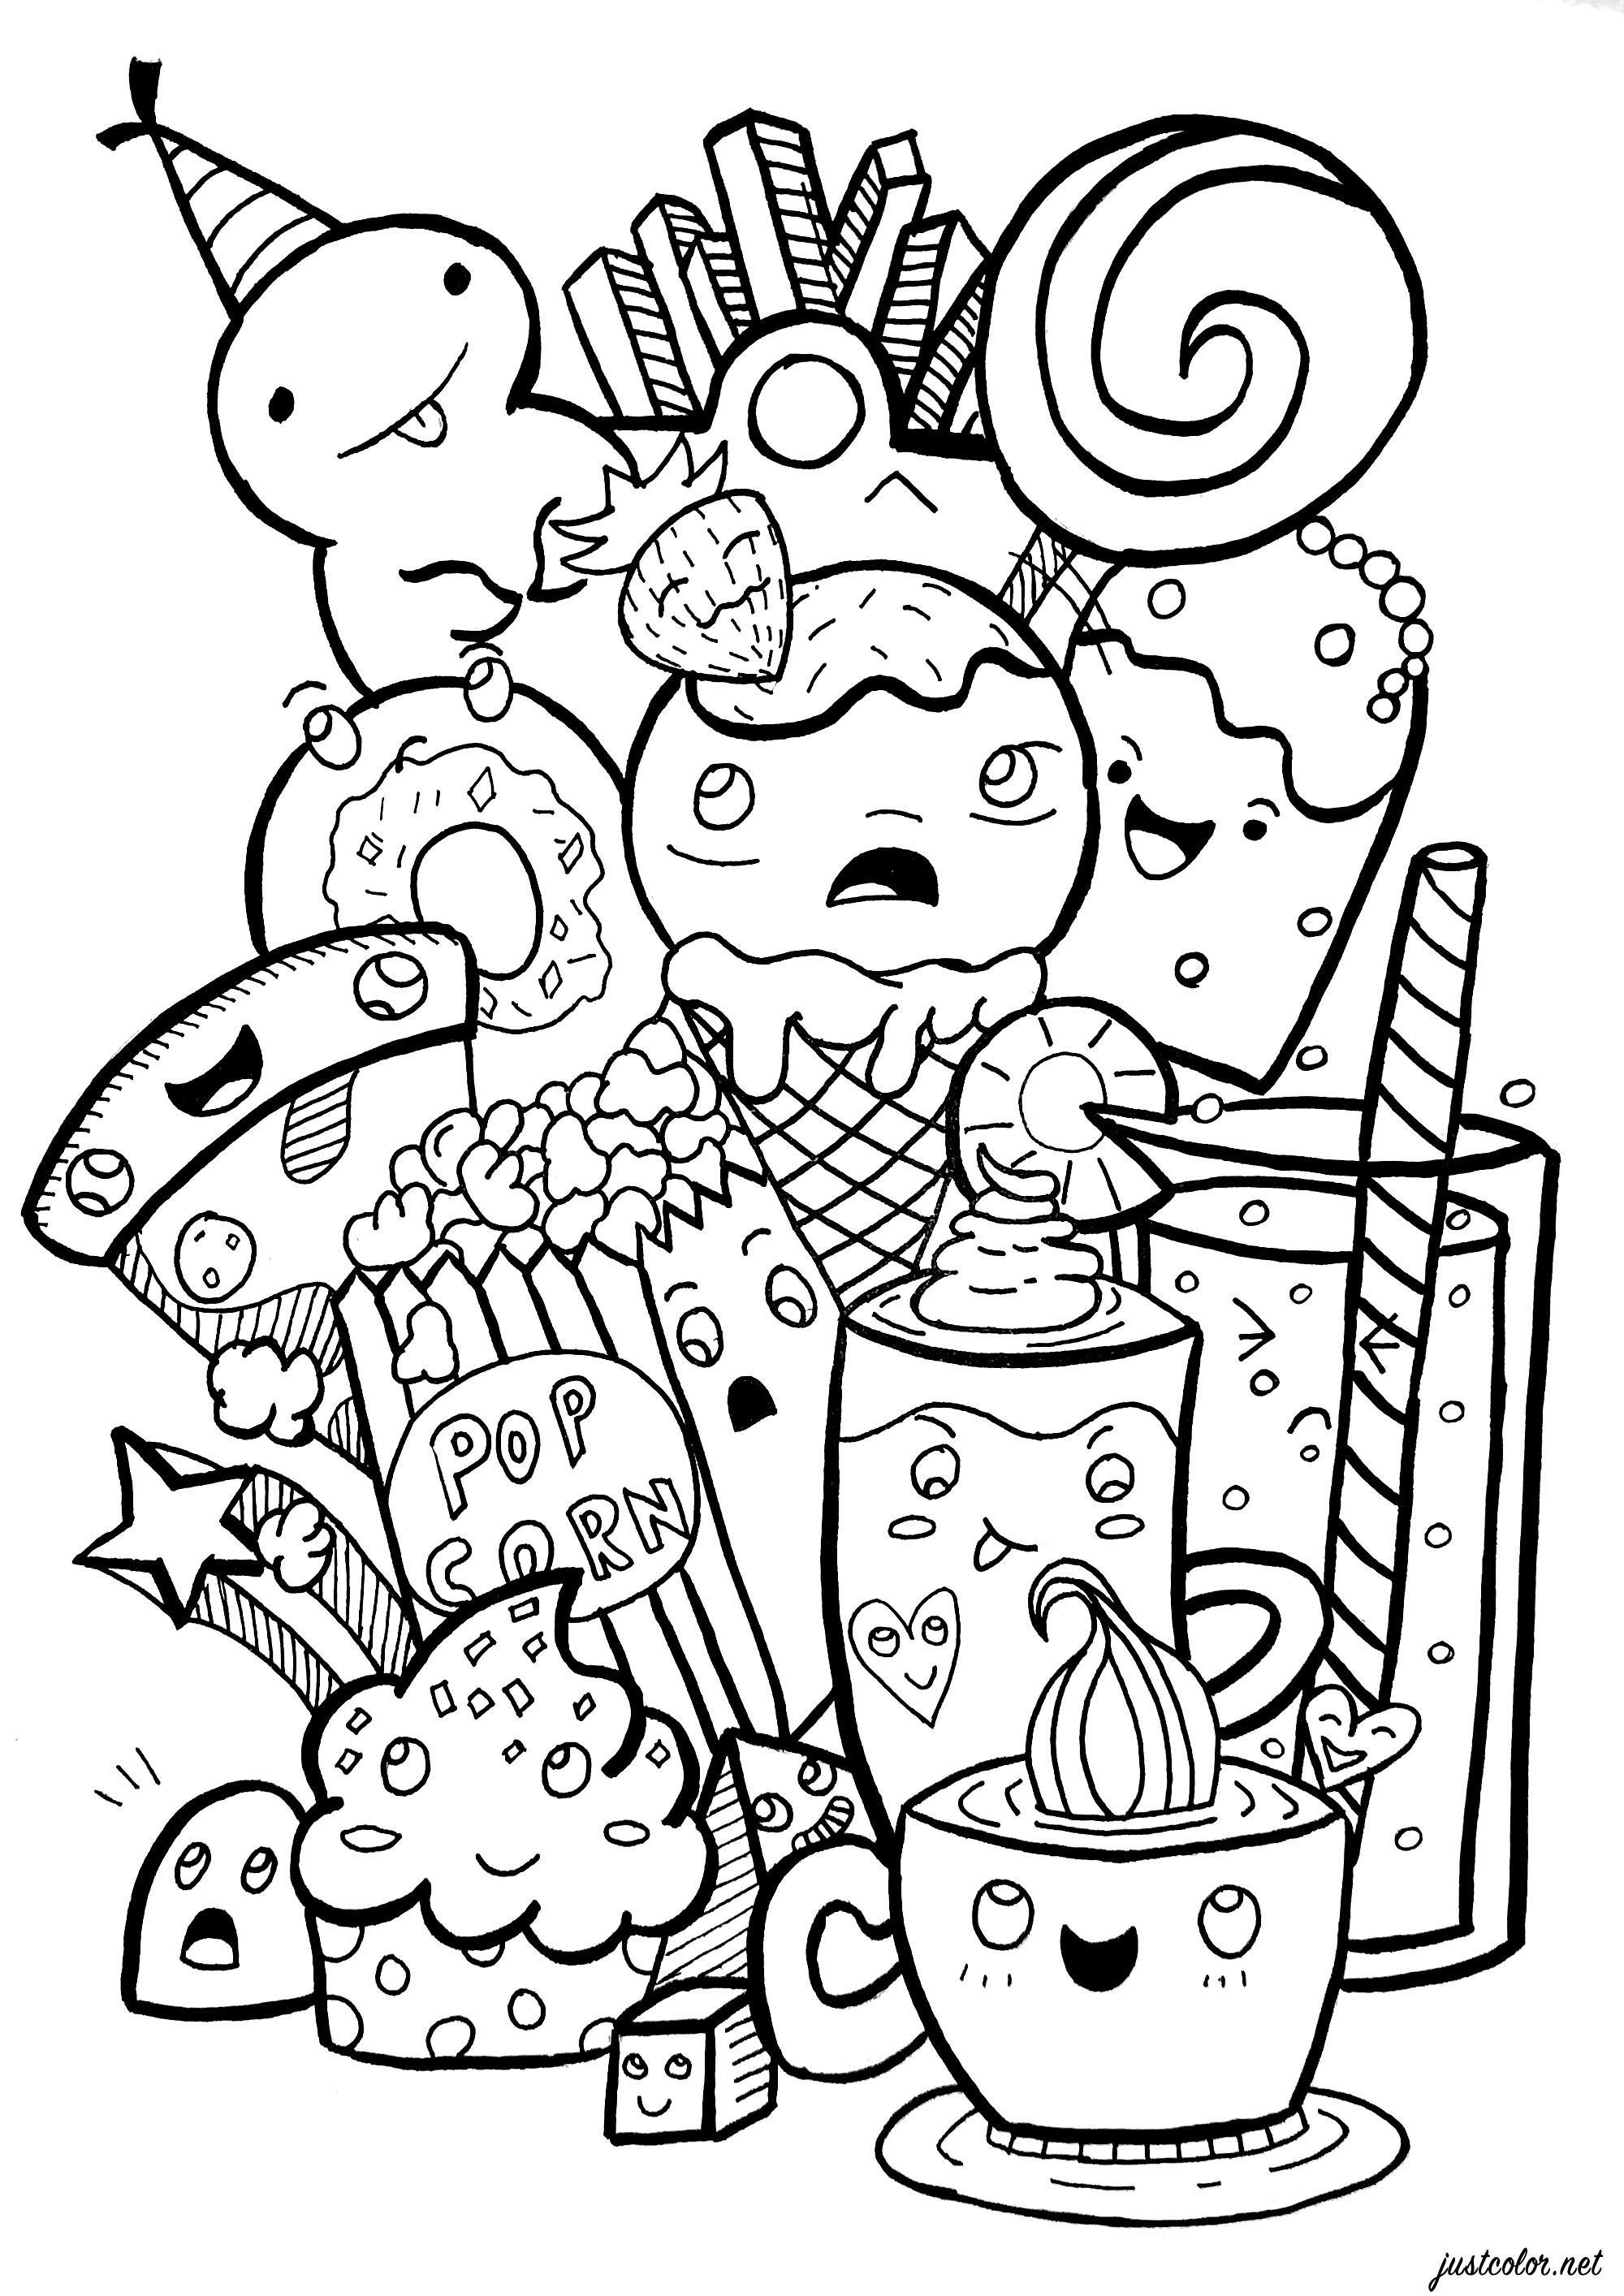 junk-food-doodle-doodle-art-doodling-adult-coloring-pages